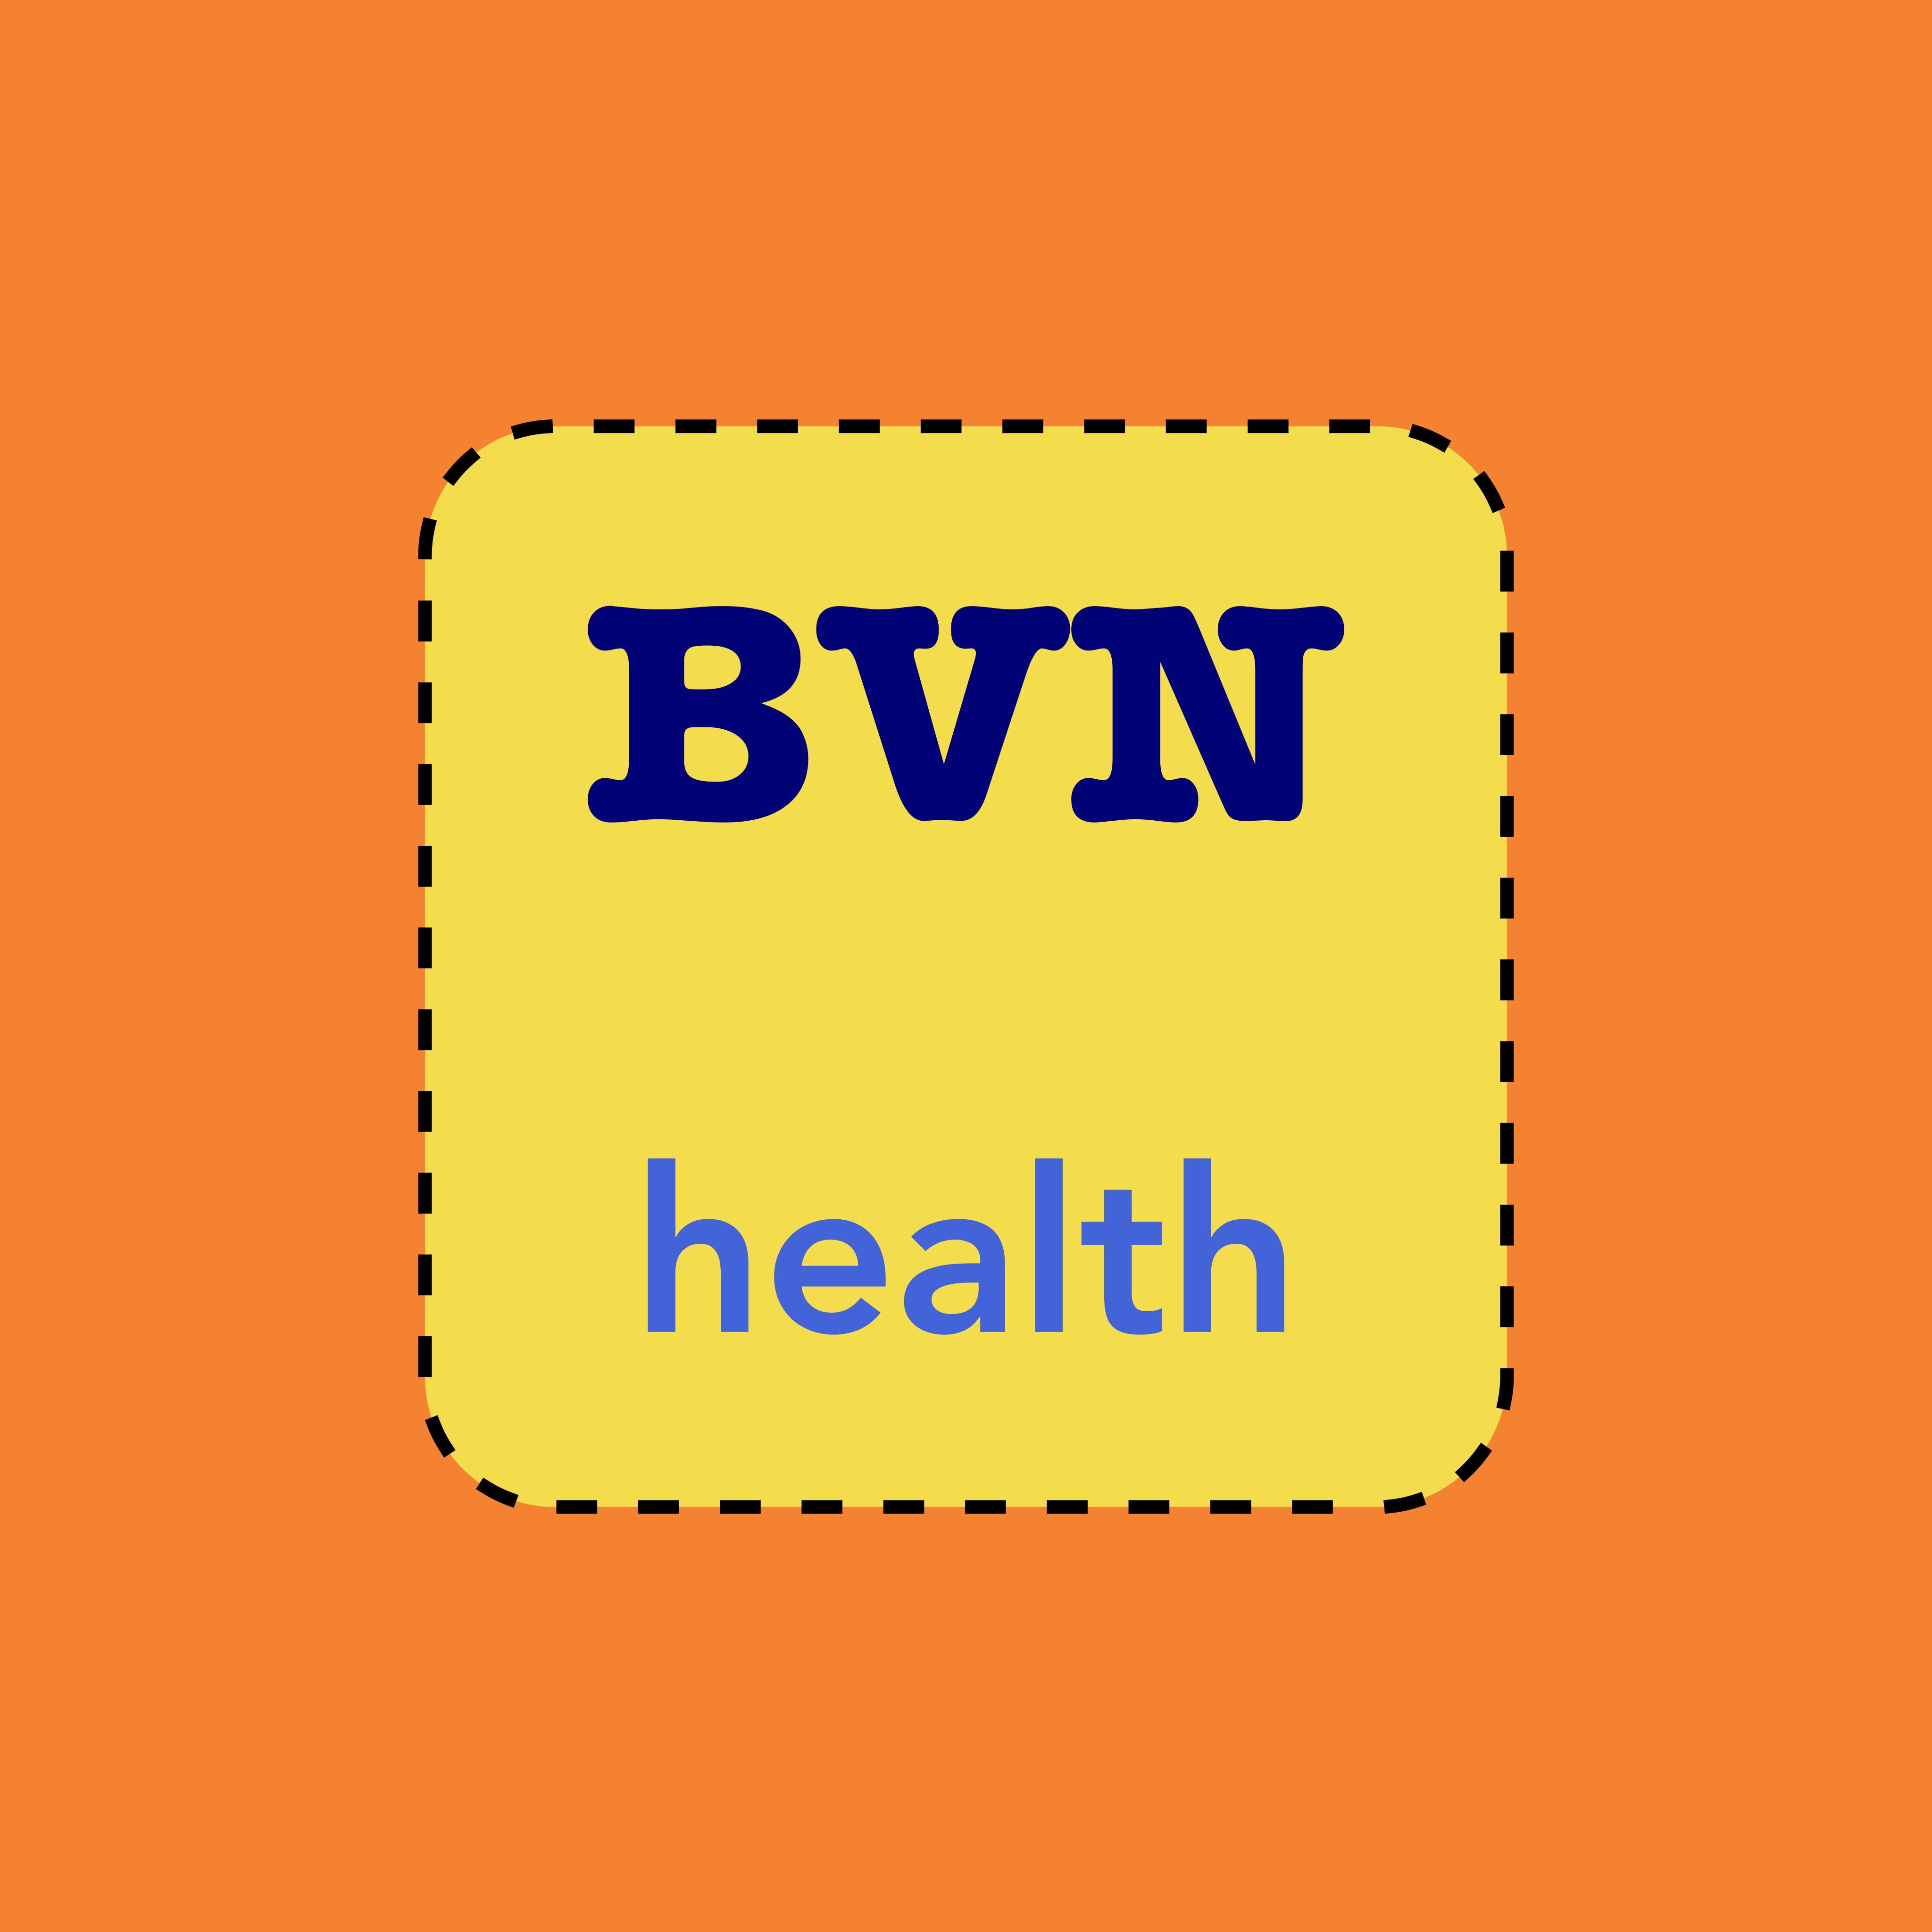 BVN health